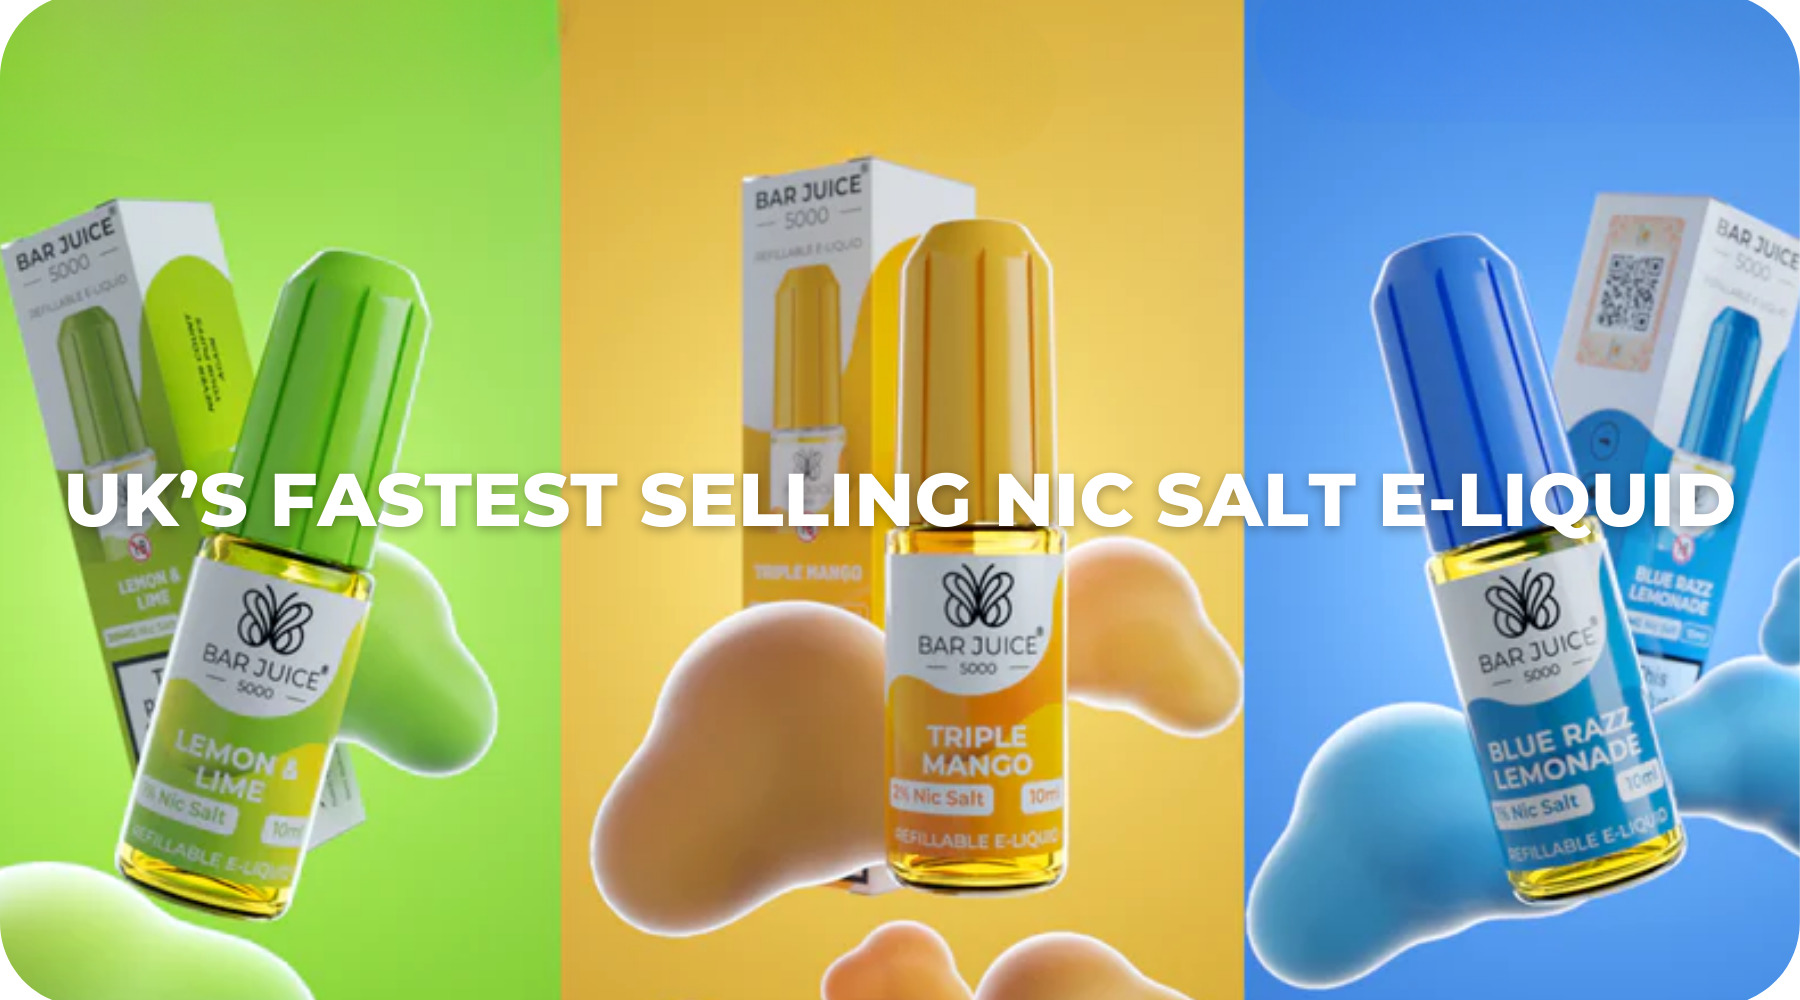 Bar Juice 5000 Nic Salt E-Liquid